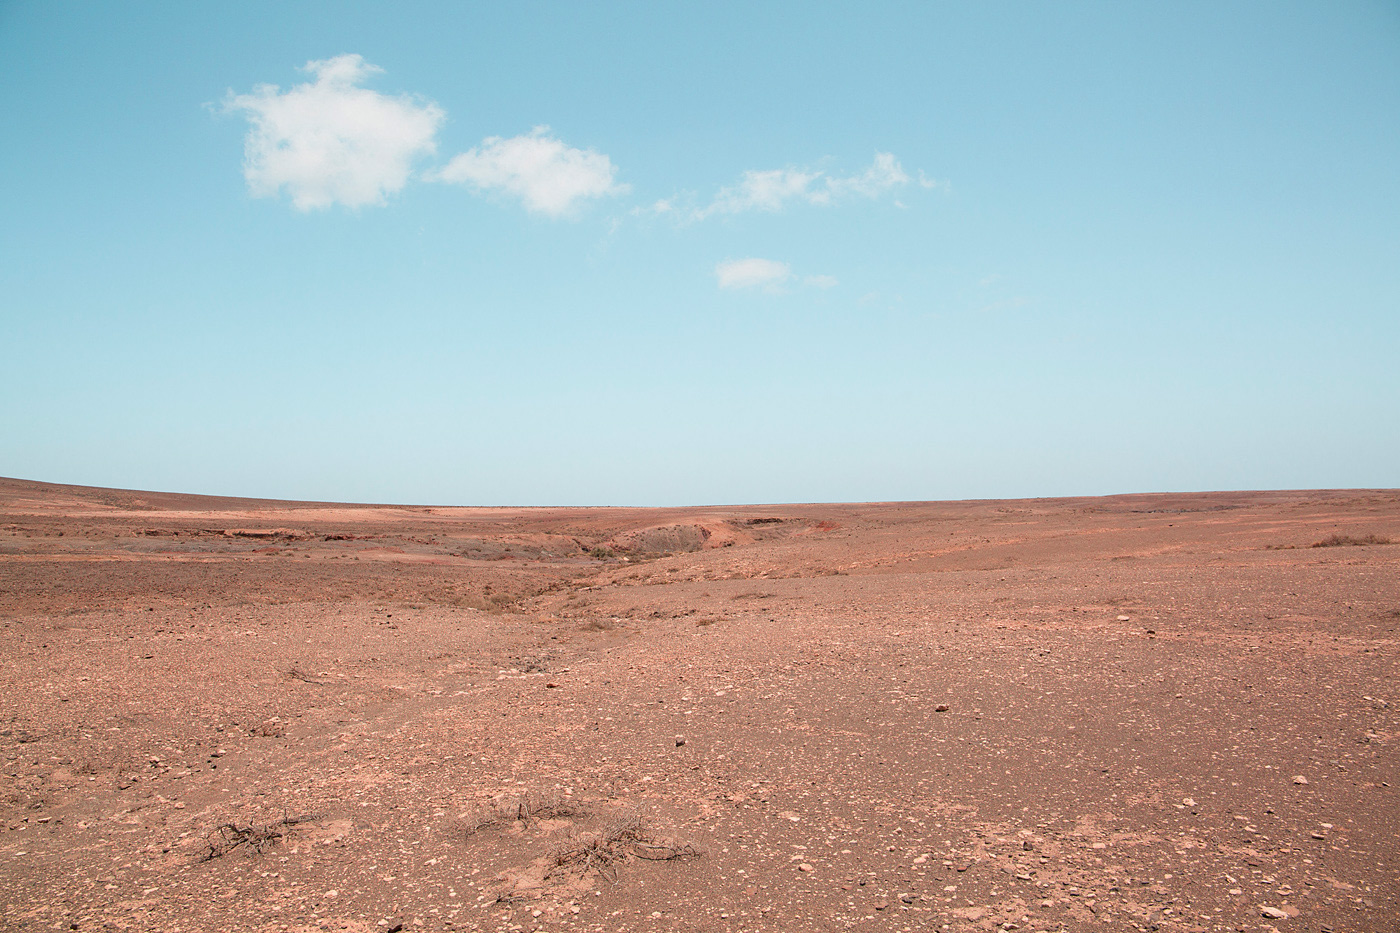 Travel Landscape lanzarote Island spain volcanoes Nature desert rural Void